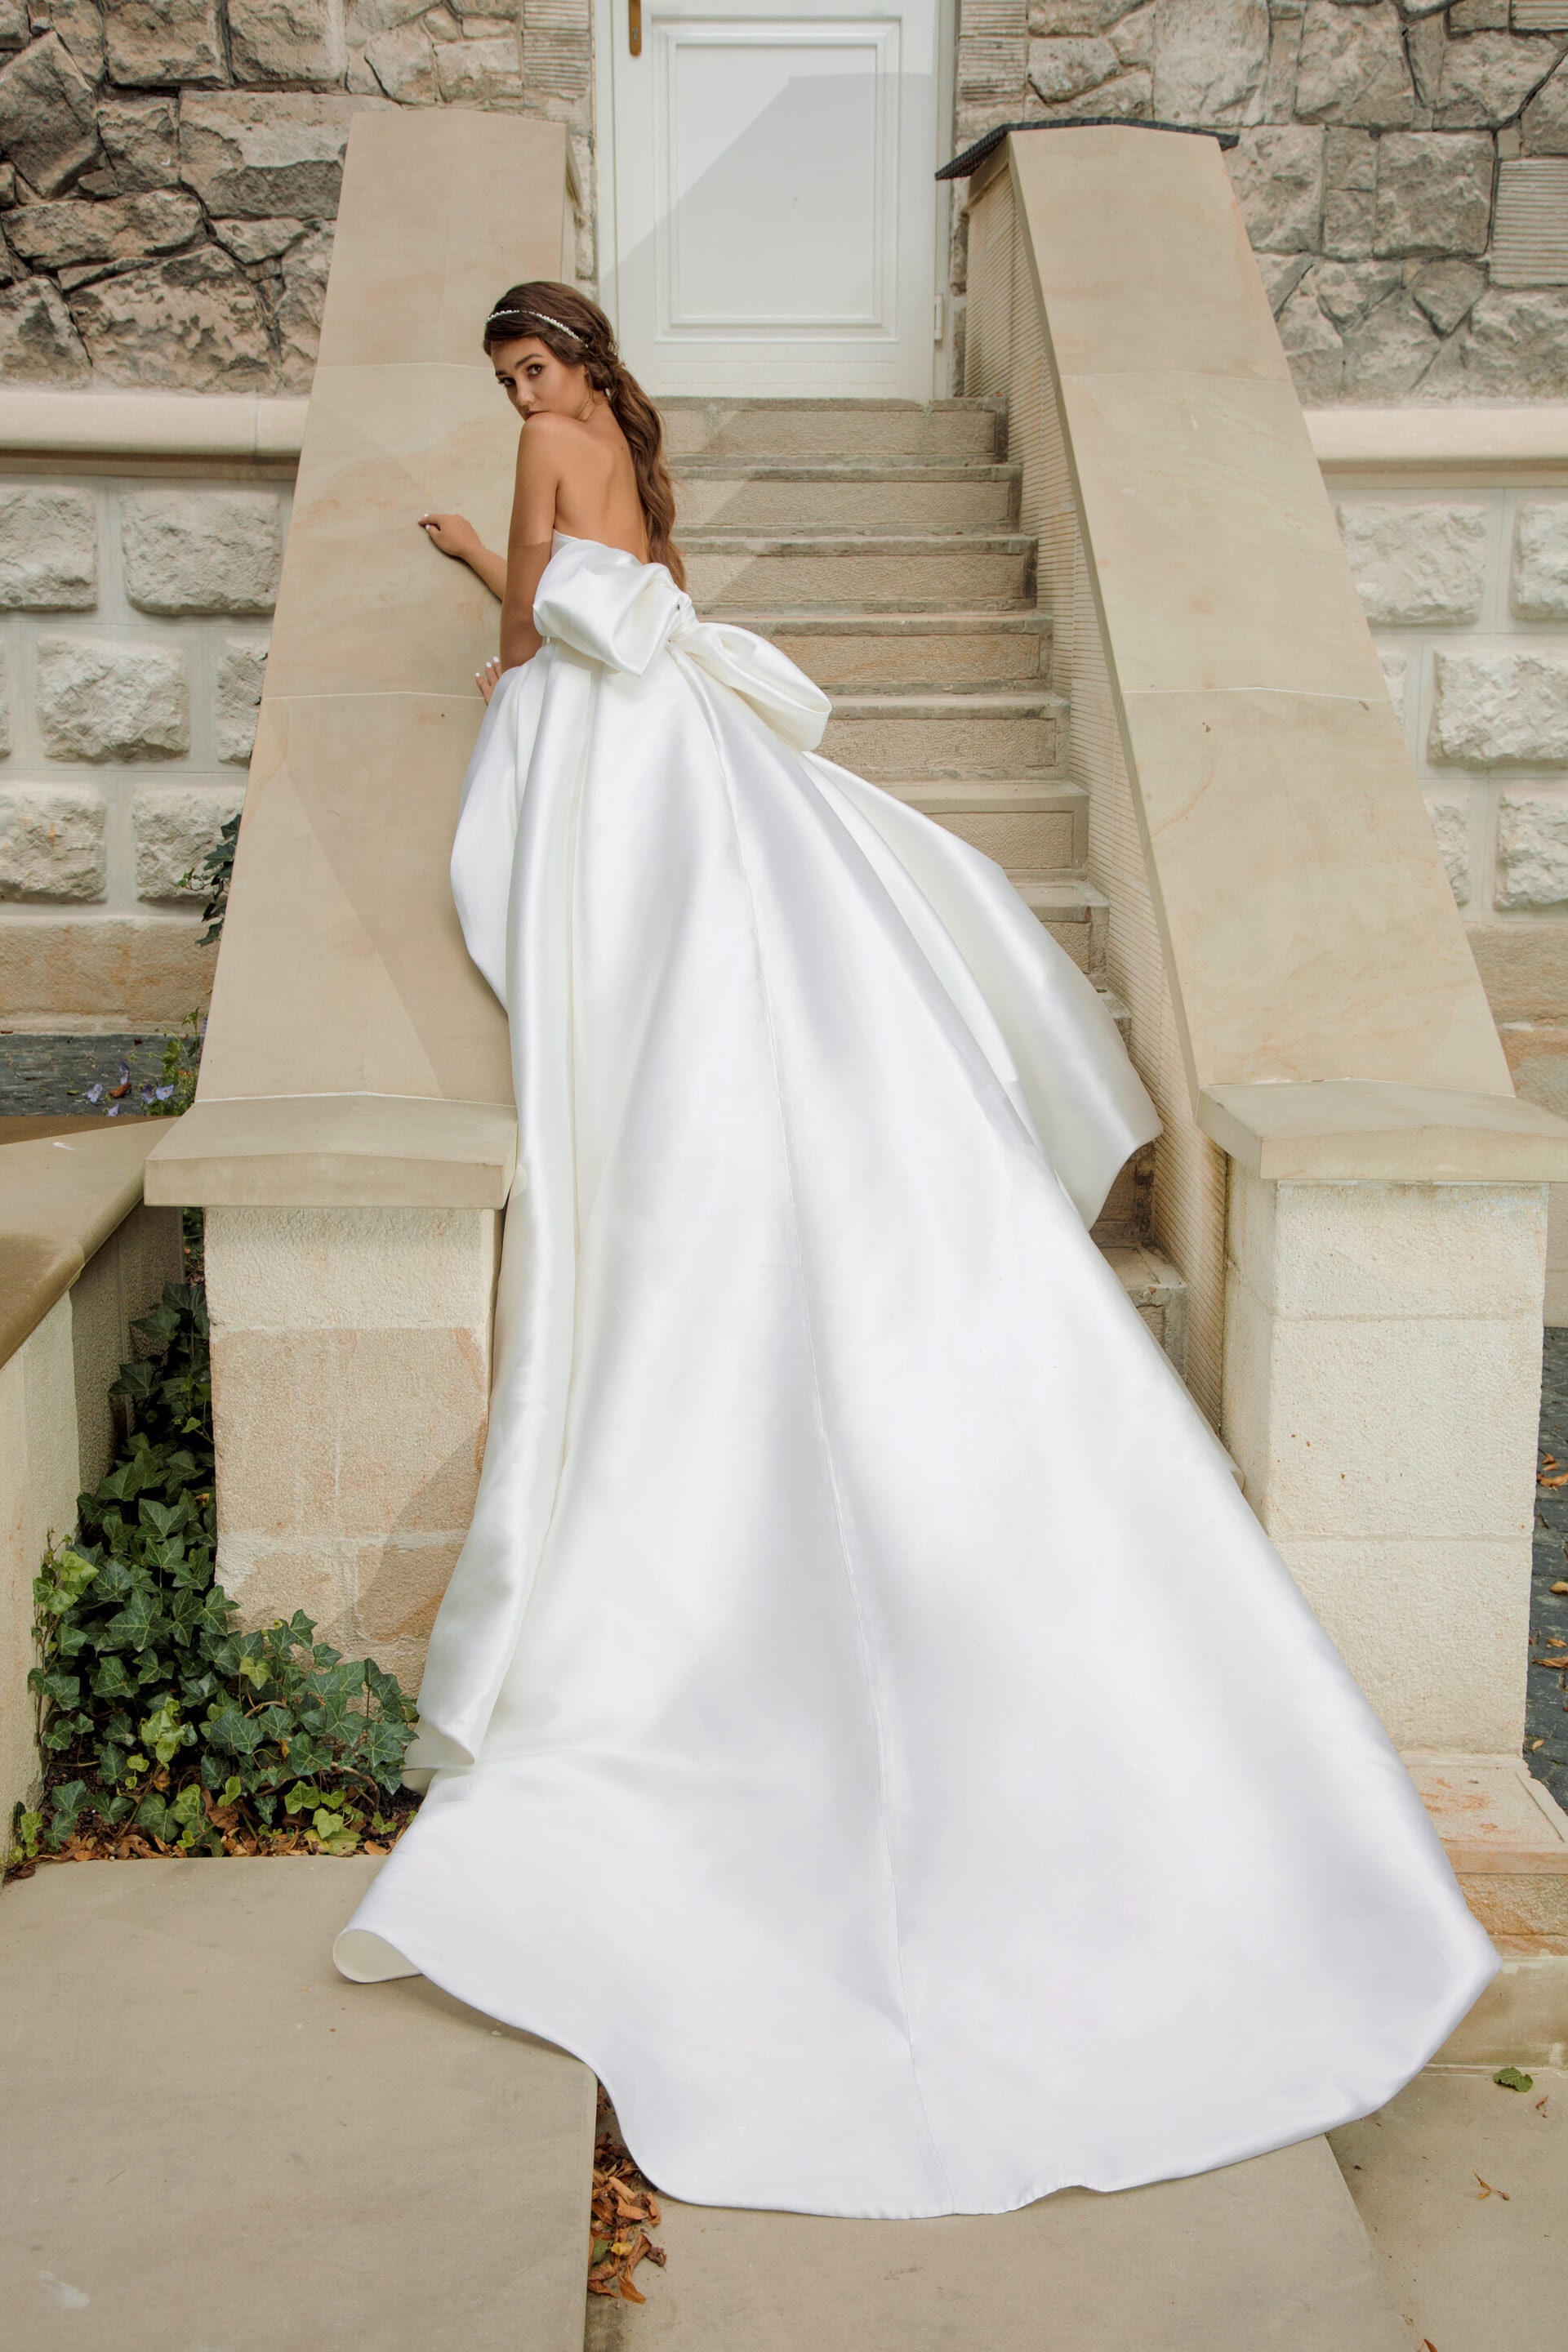 Ball Gown Wedding Dress Marisa Size 8 in Stock, Transformer Wedding Dress,  Wedding Dress With Bolero, Ivory Wedding Dress -  Ireland